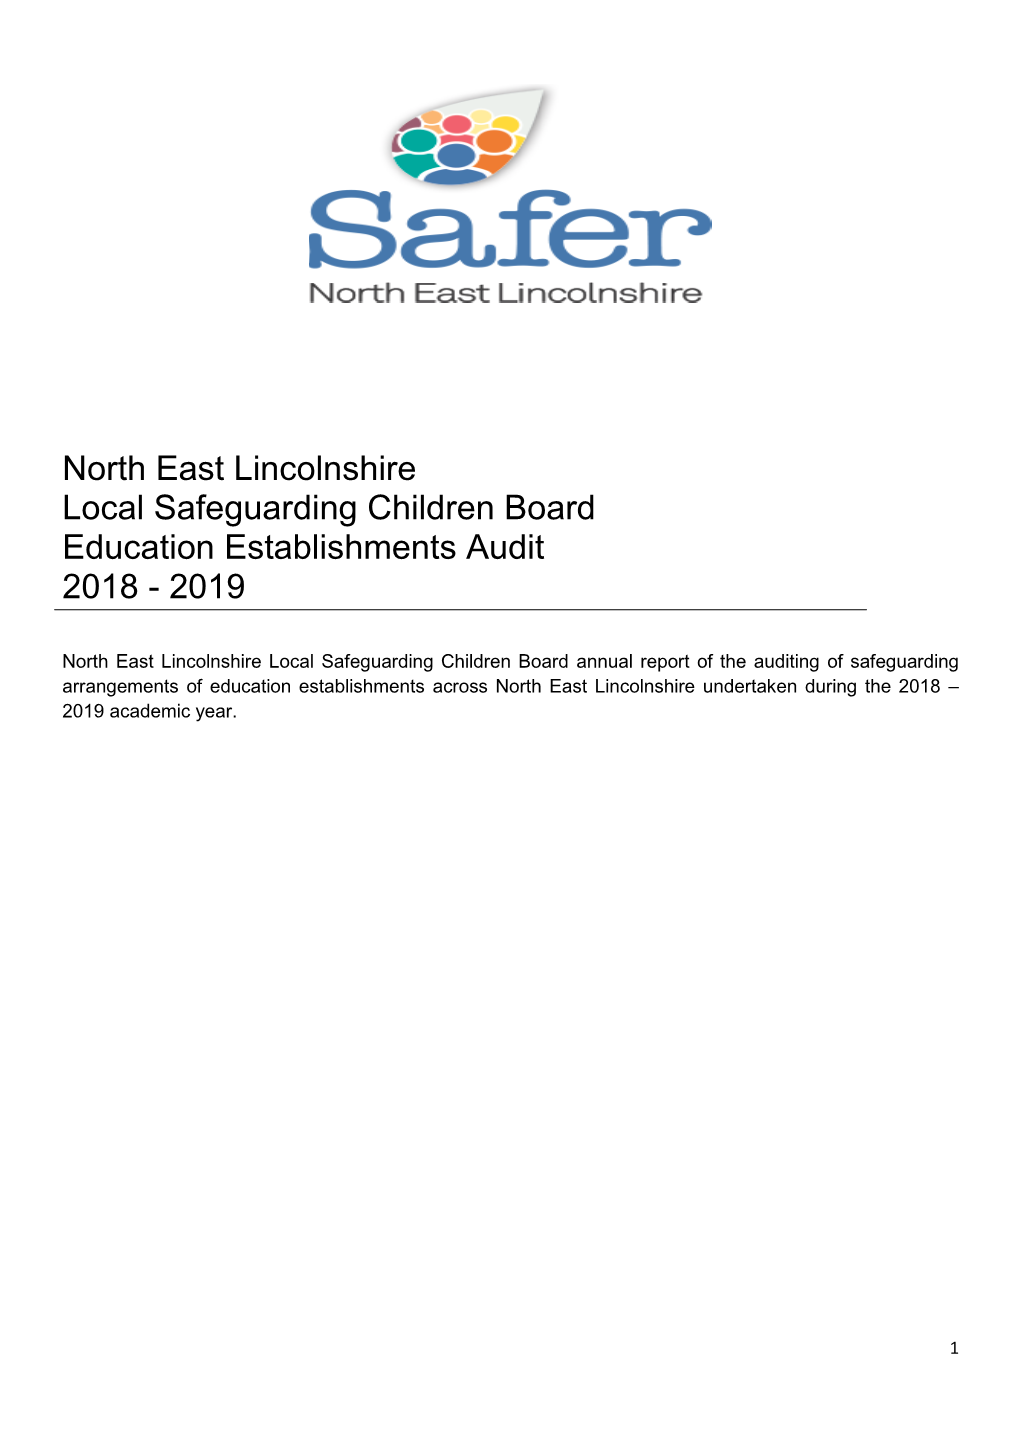 NEL LSCB Education Establishments Safeguarding Audit 2018